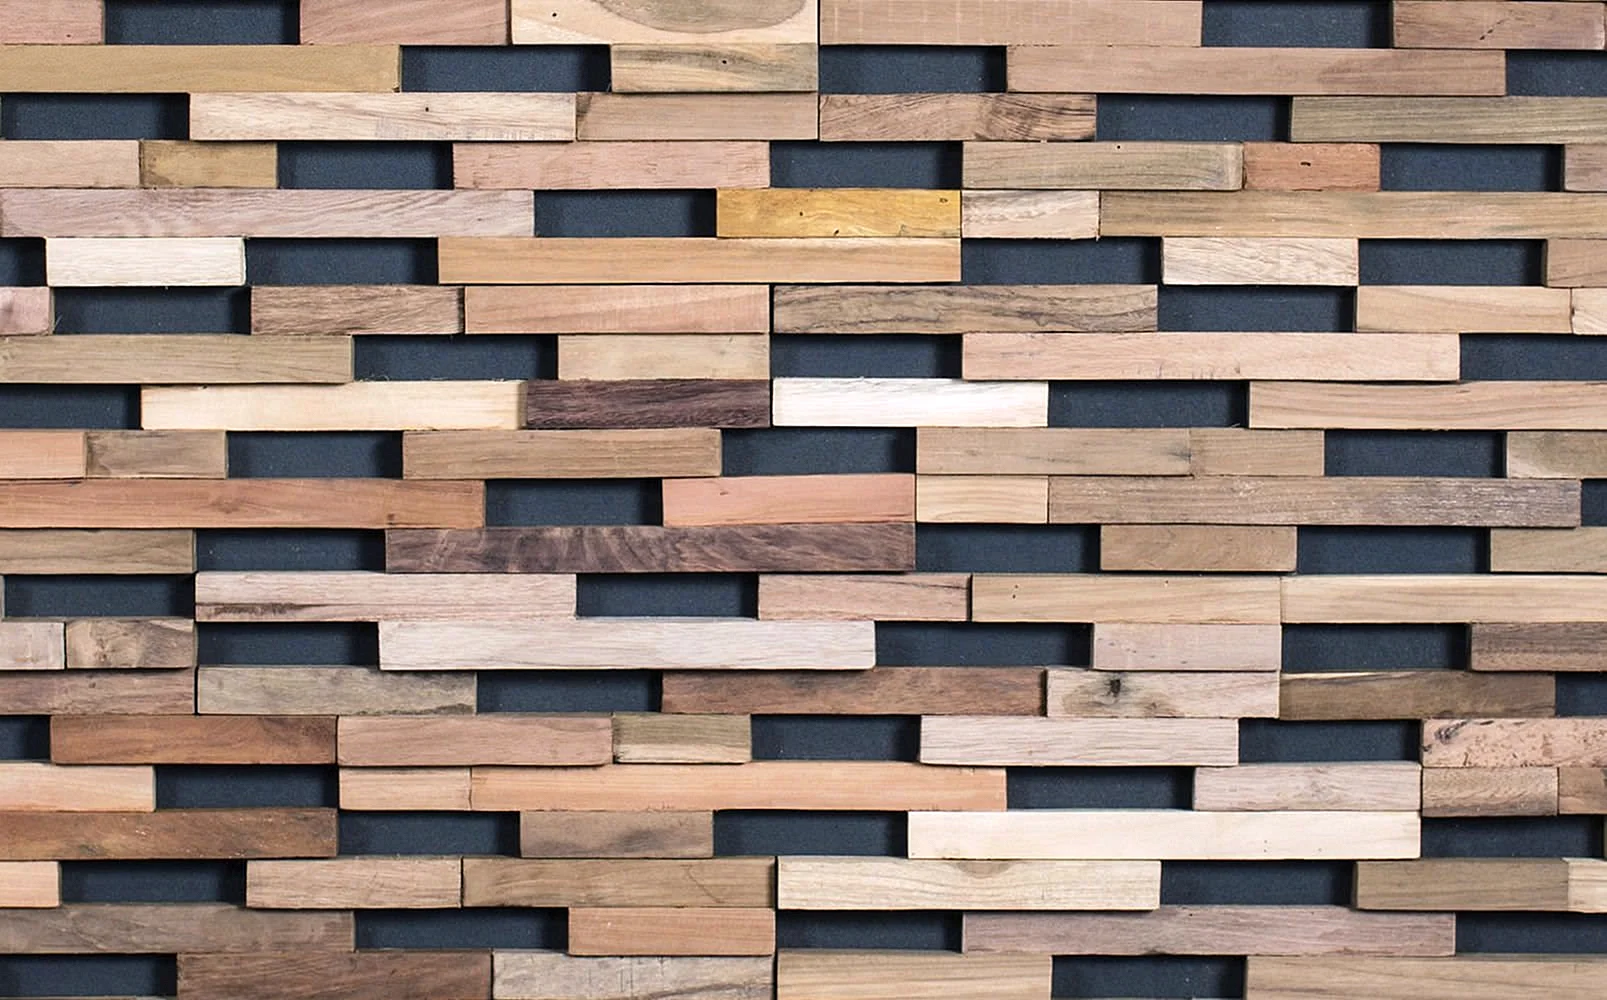 Wood Panel Wall Wallpaper